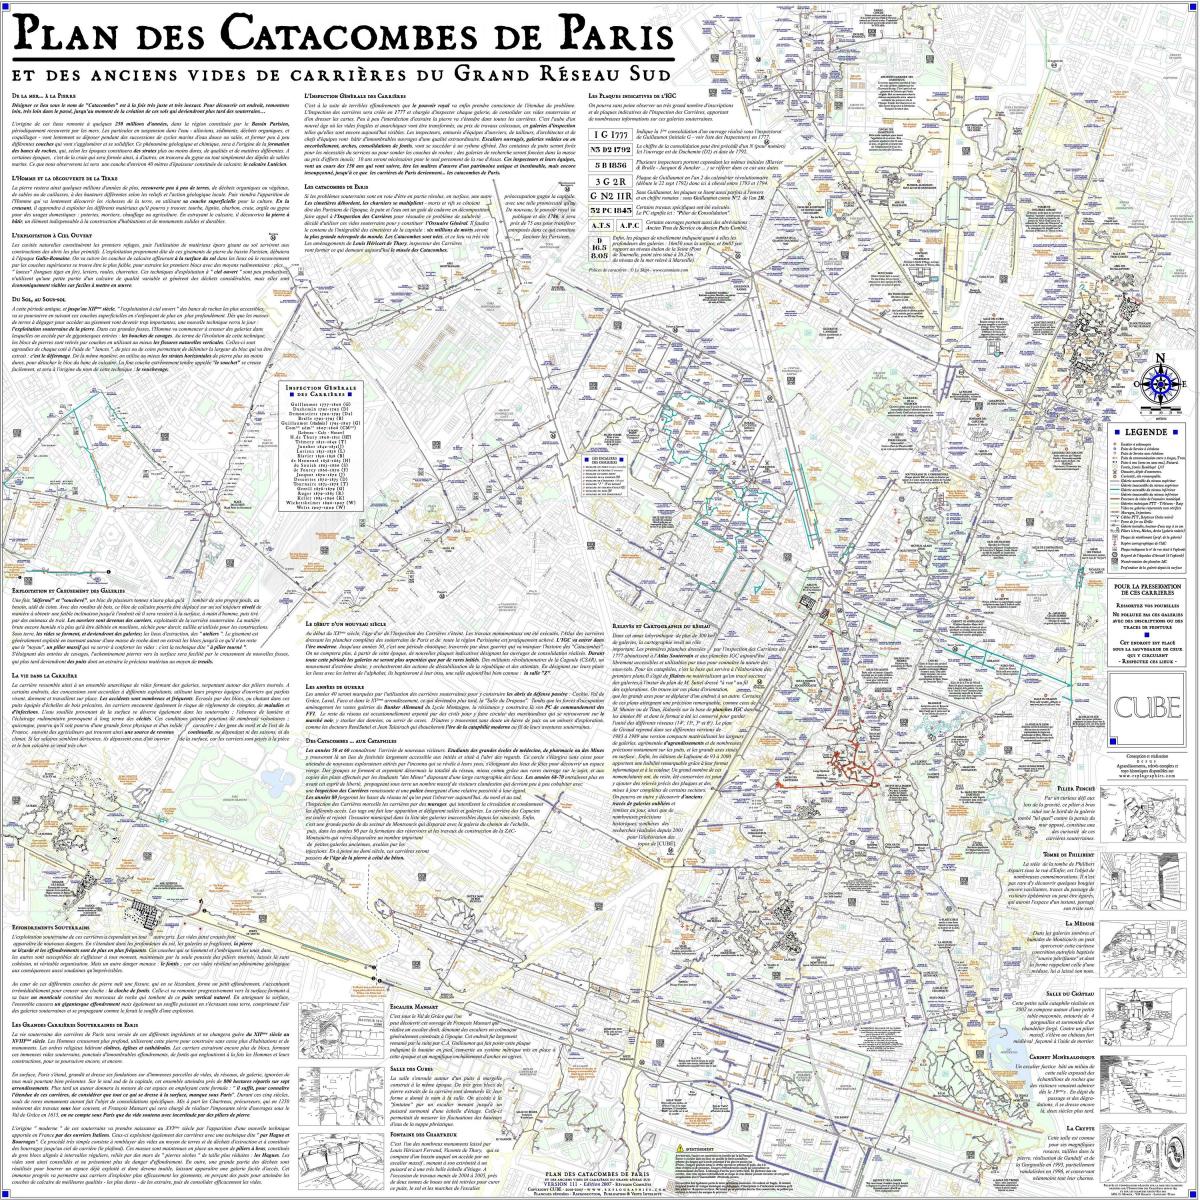 Map of Paris catacombs